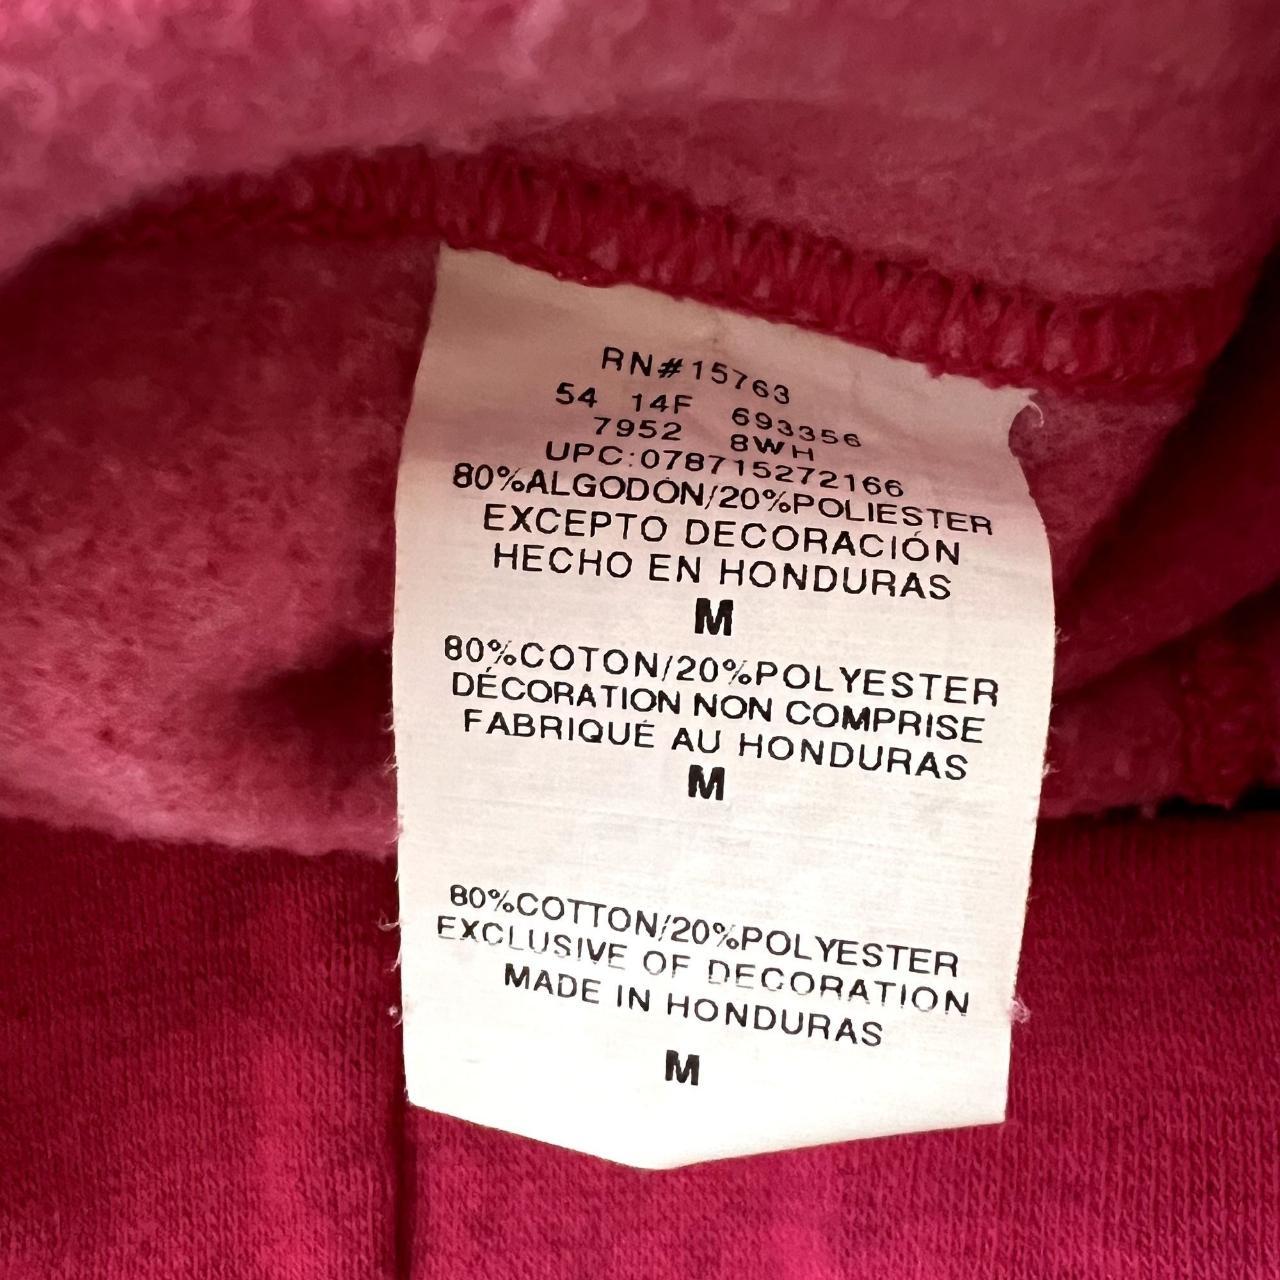 CHAMPION Long Sleeve Women's Sweatshirt Pink Size Medium RN 15763 